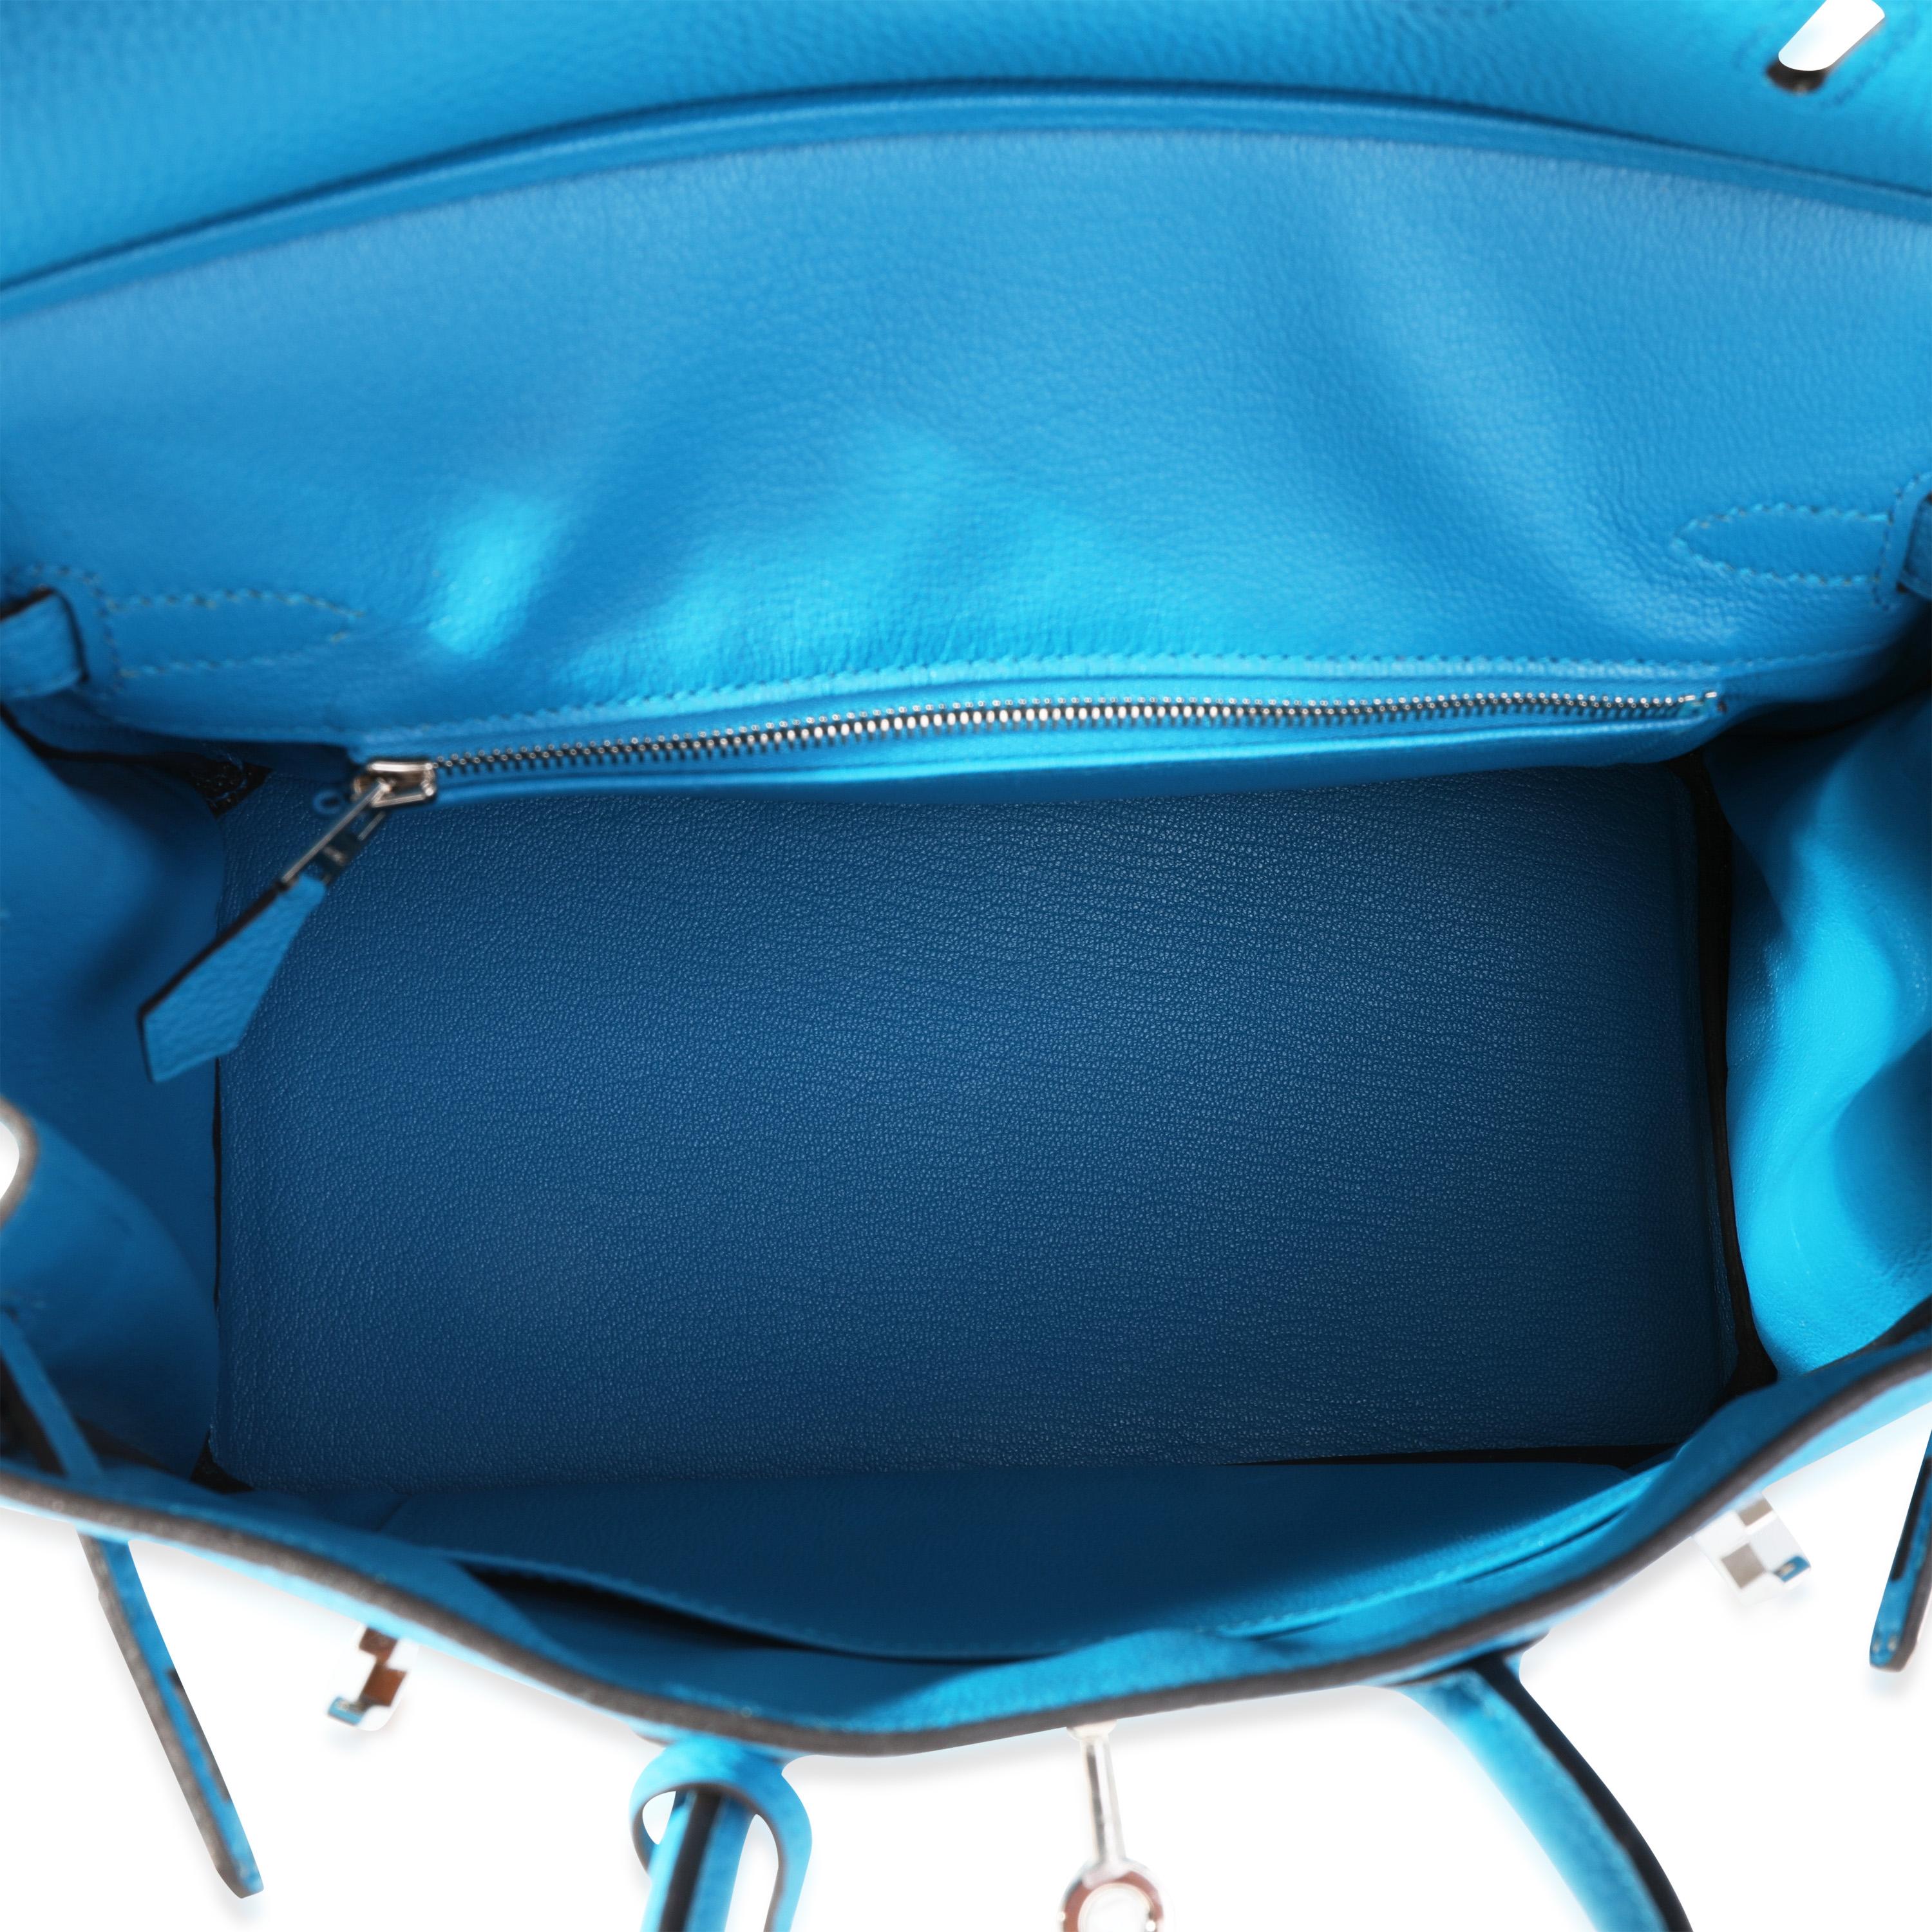 Listing Title: Hermès Bleu Zanzibar Togo Birkin 25 PHW
SKU: 119773
Condition: Pre-owned (3000)
Handbag Condition: Mint
Condition Comments: Mint Condition. Plastic on hardware. No visible signs of wear. Final sale.
Brand: Hermès
Model: Birkin
Origin